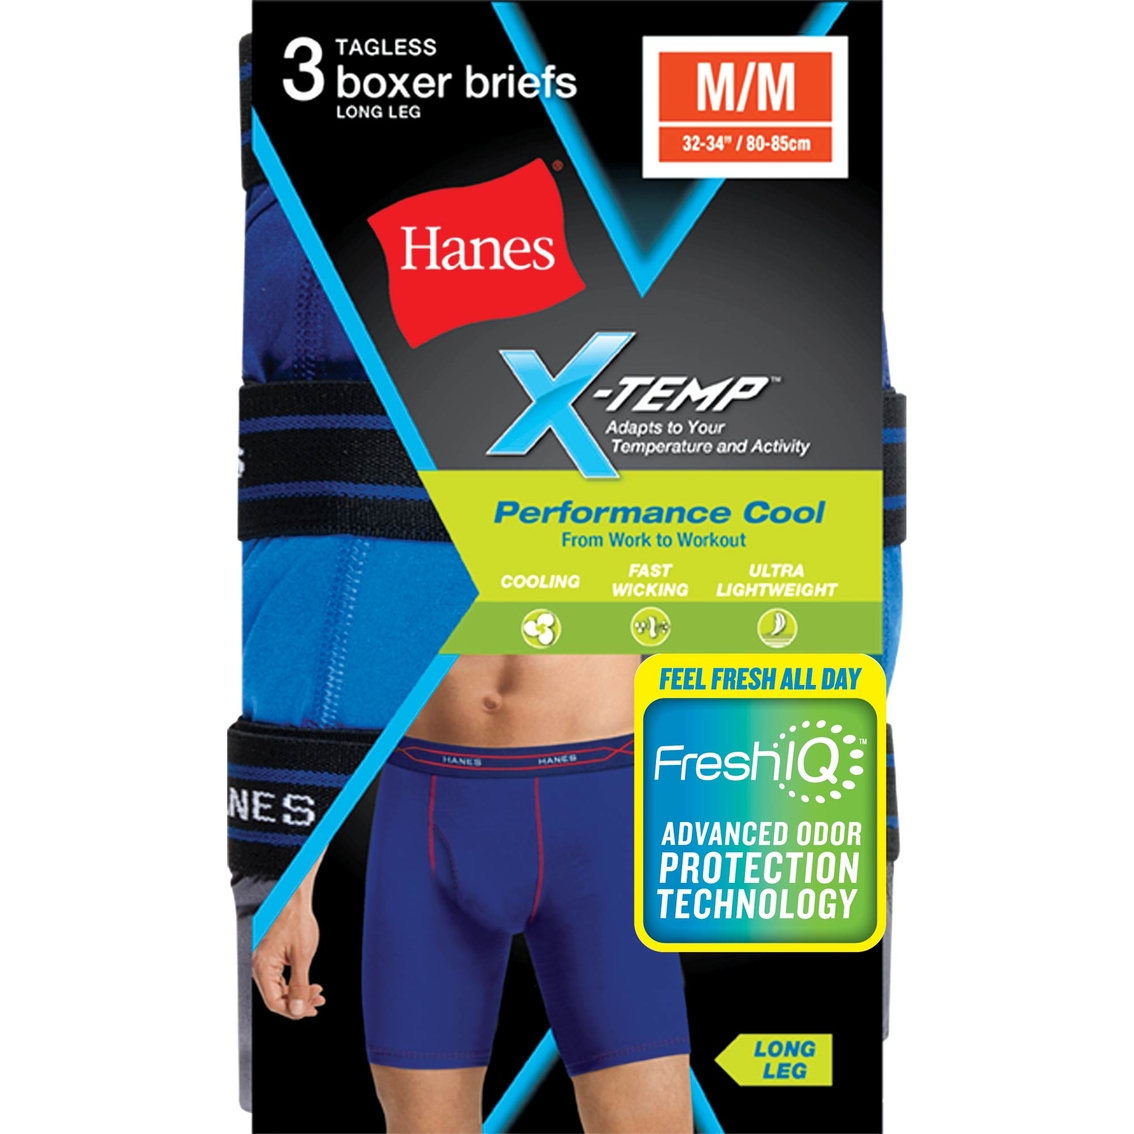 Hanes Performance Cool X-temp Longer Leg Boxer Briefs 3 Pk., Underwear, Clothing & Accessories